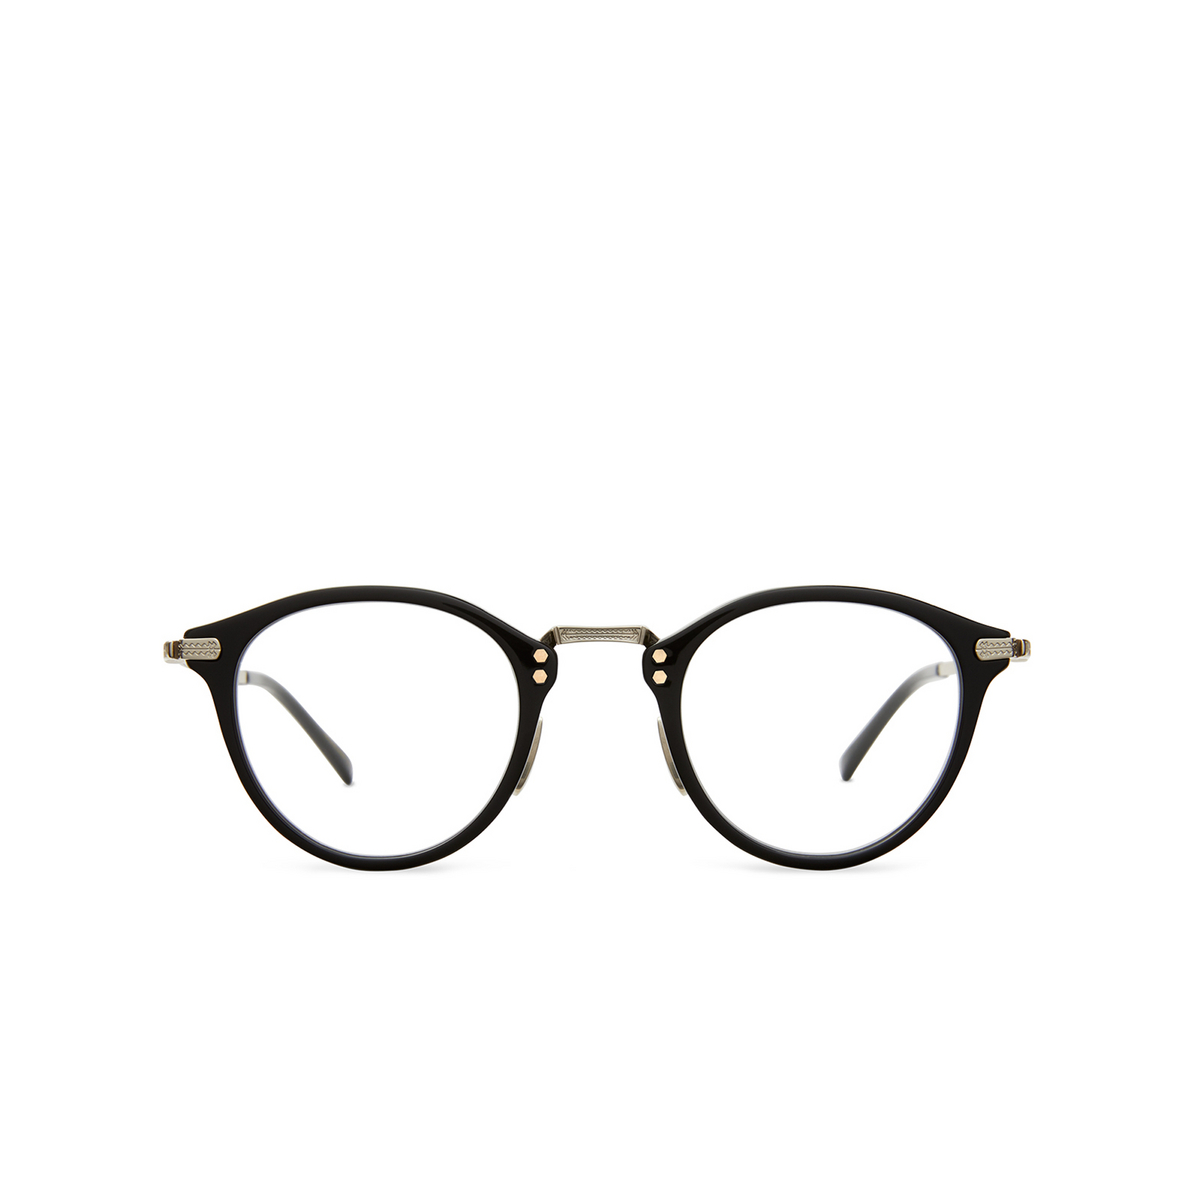 Mr. Leight STANLEY C Eyeglasses BK-PW-BK Black-Pewter-Black - front view